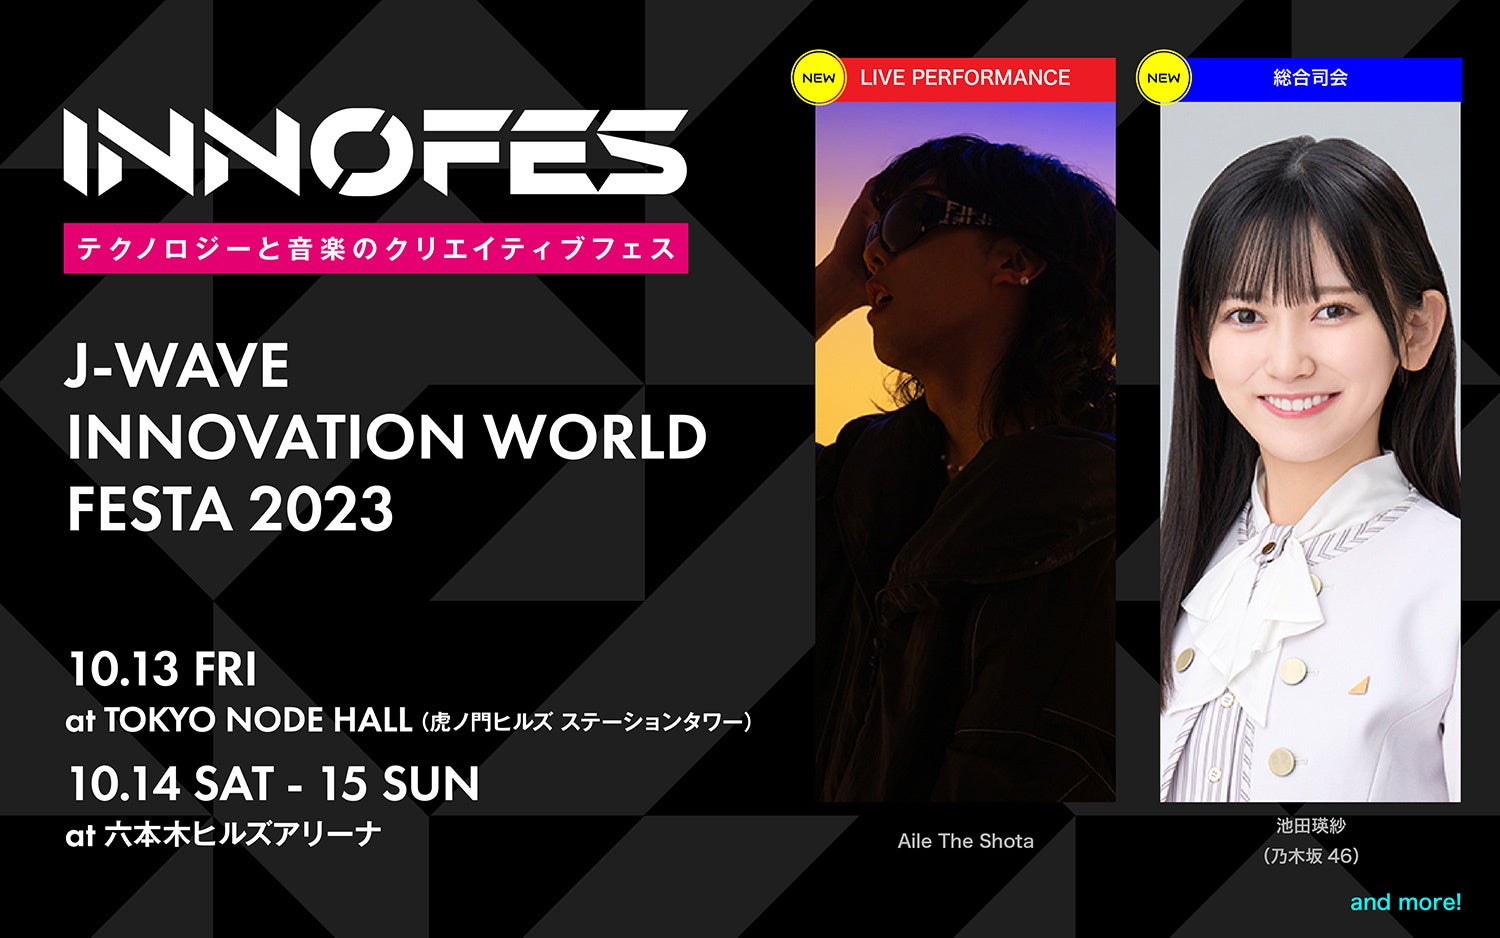 Aile The Shotaが「イノフェス」10/14に出演決定！話題のMVを拡張した最先端ライブを披露。総合司会には乃木坂46　池田瑛紗が就任のサブ画像1